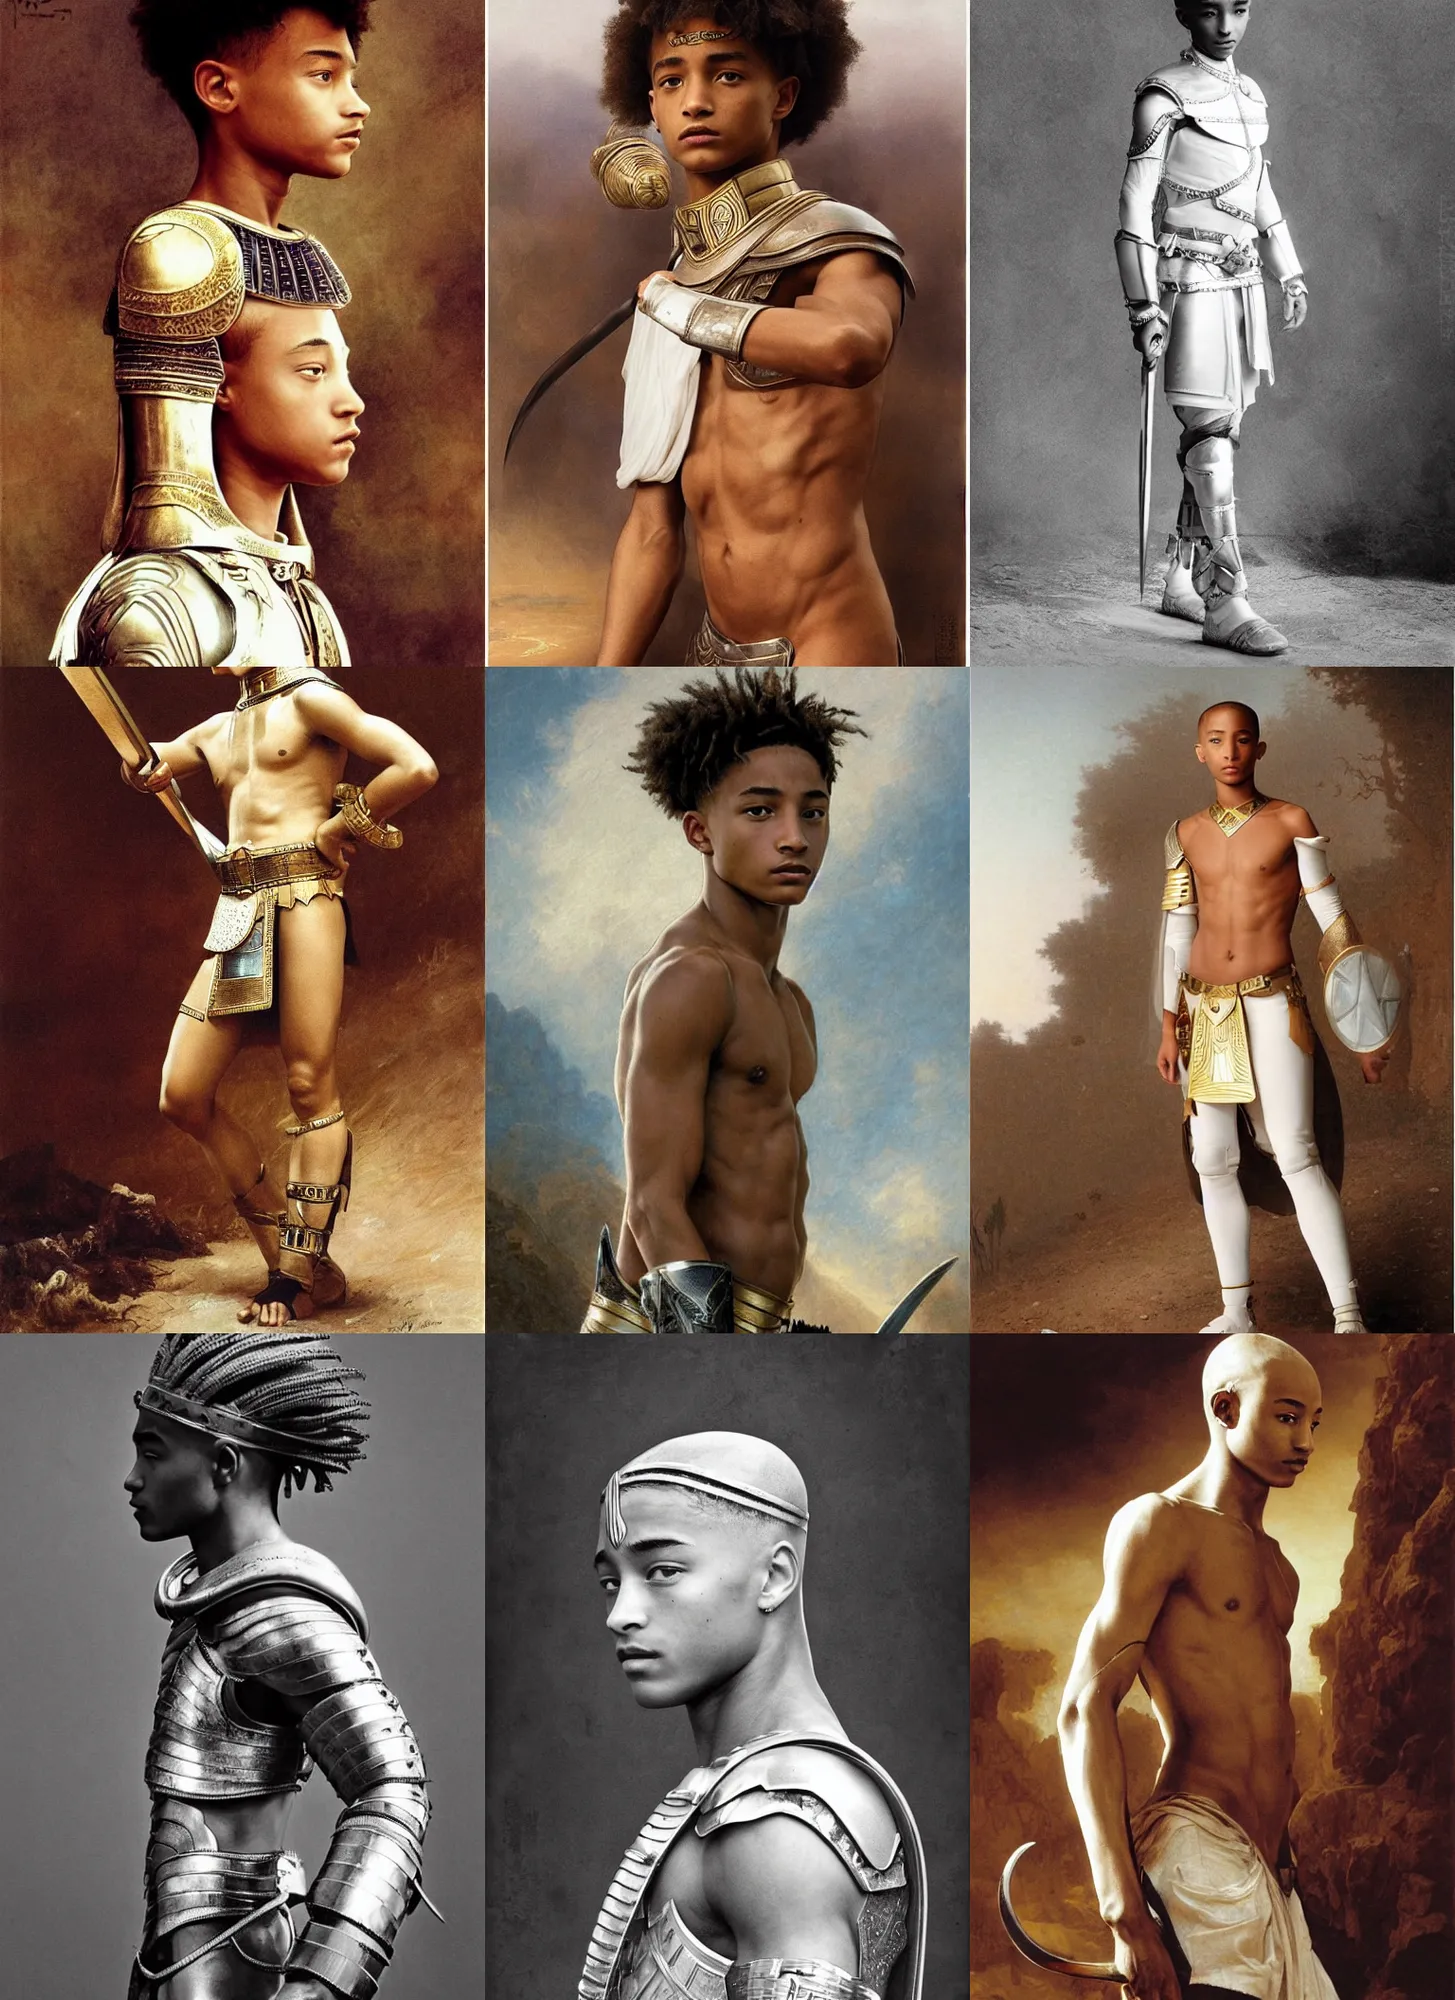 Prompt: jaden smith as young egyptian warrior, white leather armor, shaved head, intricate, sharp focus, illustration, orientalism, bouguereau, rutkowski, jurgens